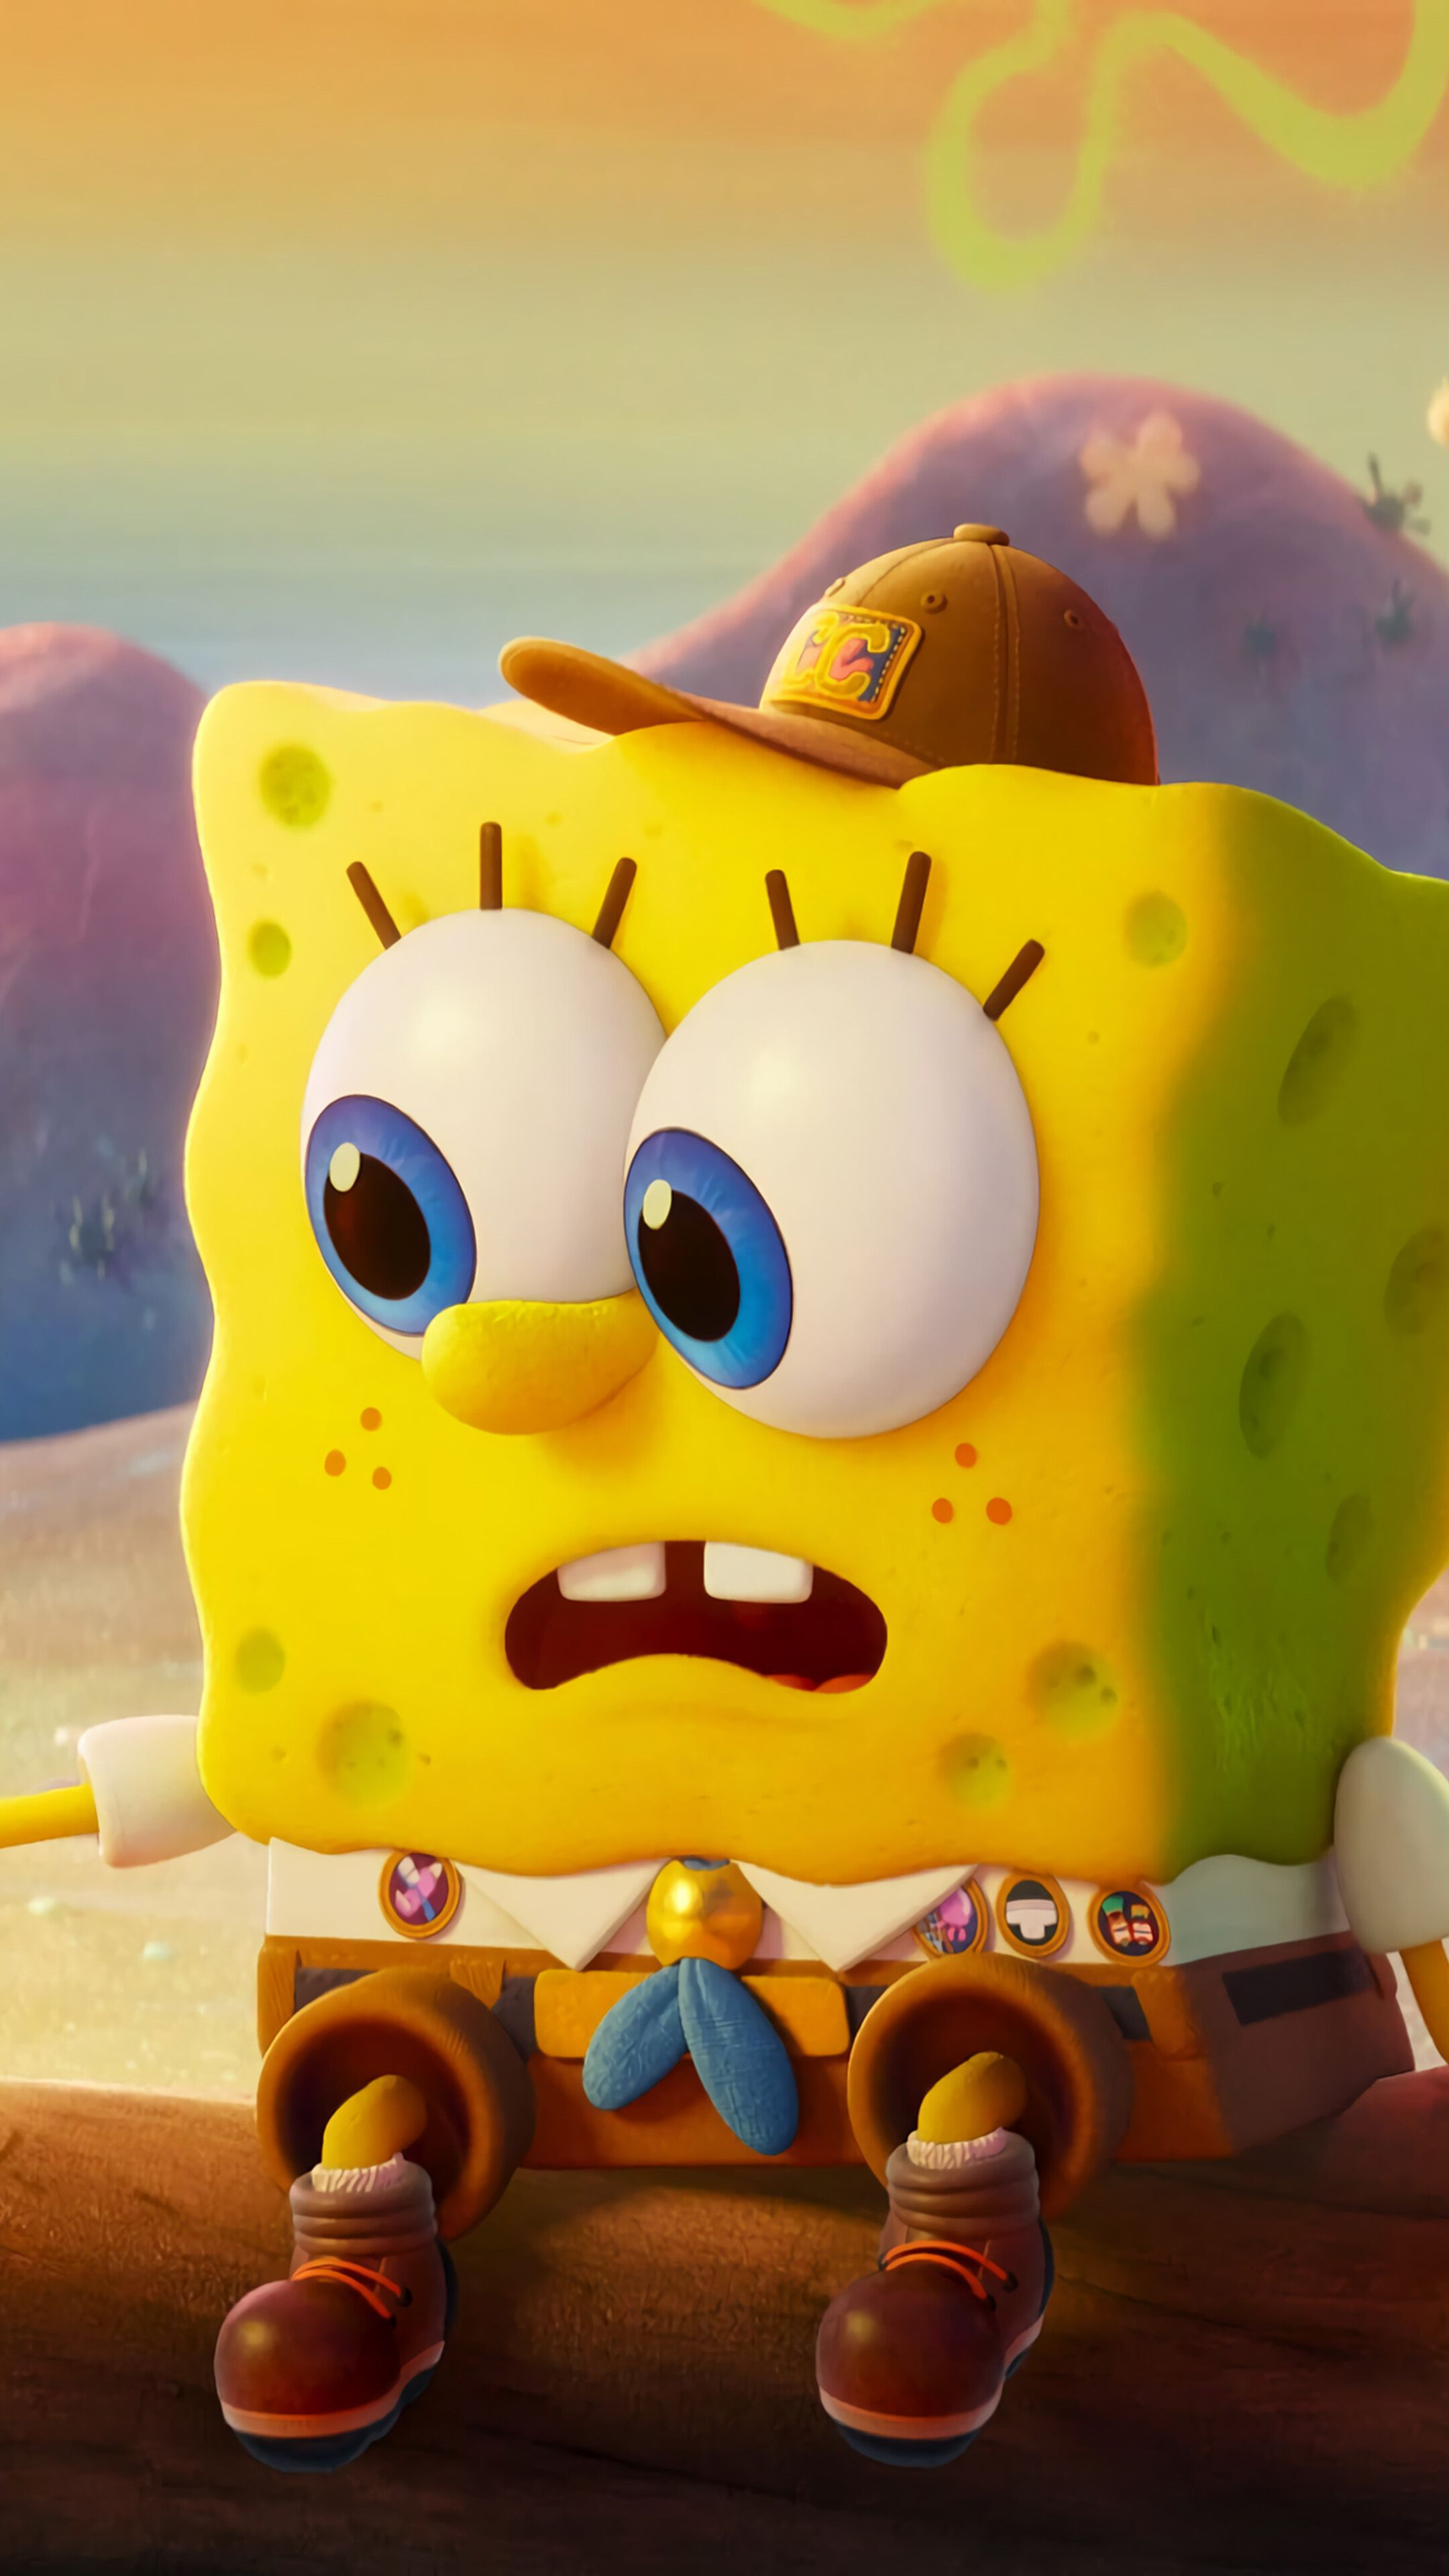 spongebob - doodlebob